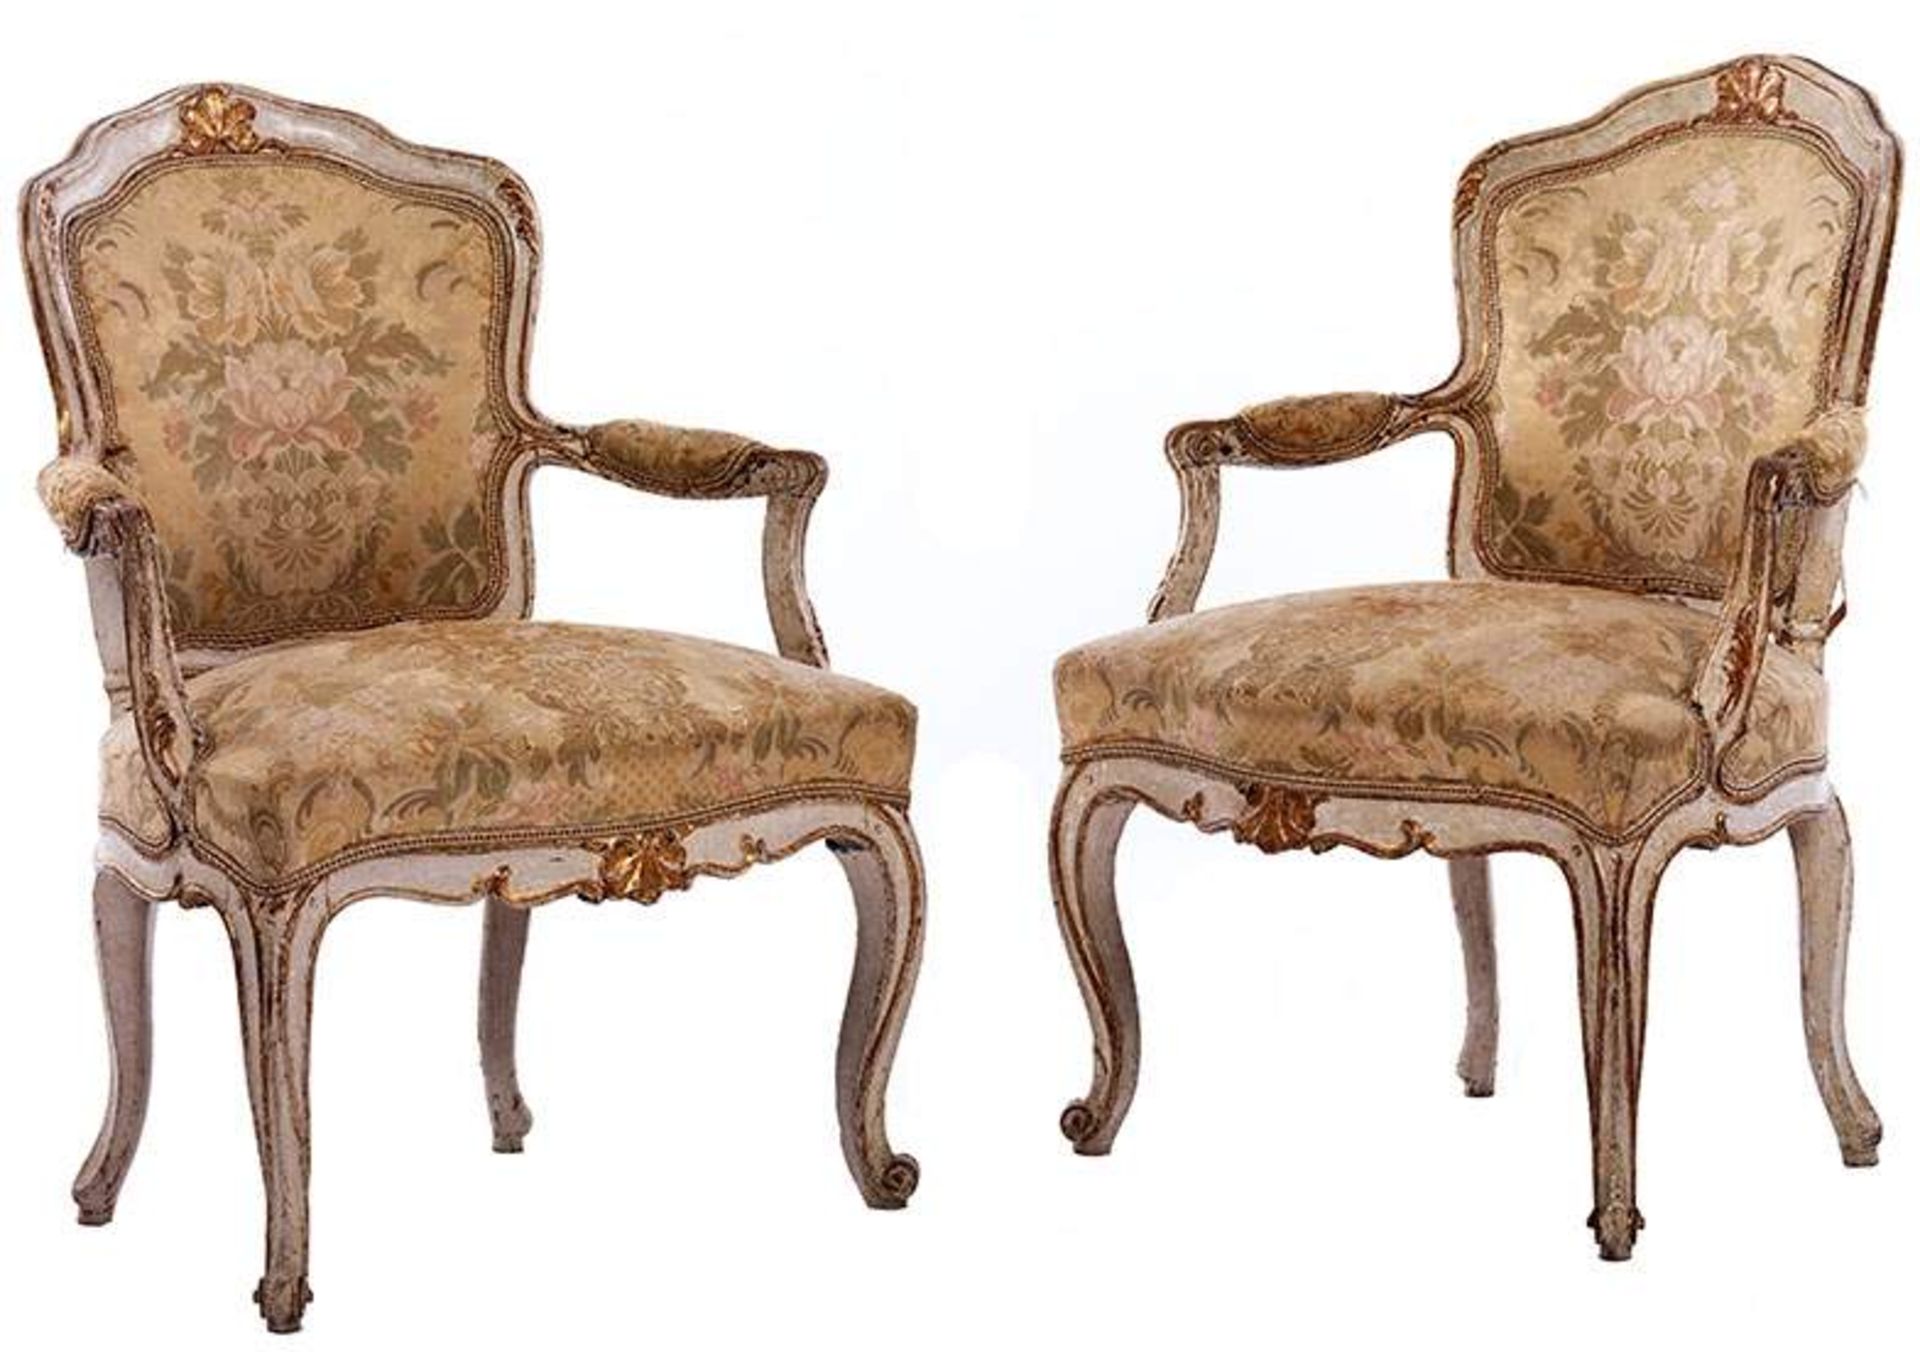 Pair of small armchairsHeight: 87 cm. Width: ca. 67 cm. Depth: ca. 50 cm. France, 18th century.